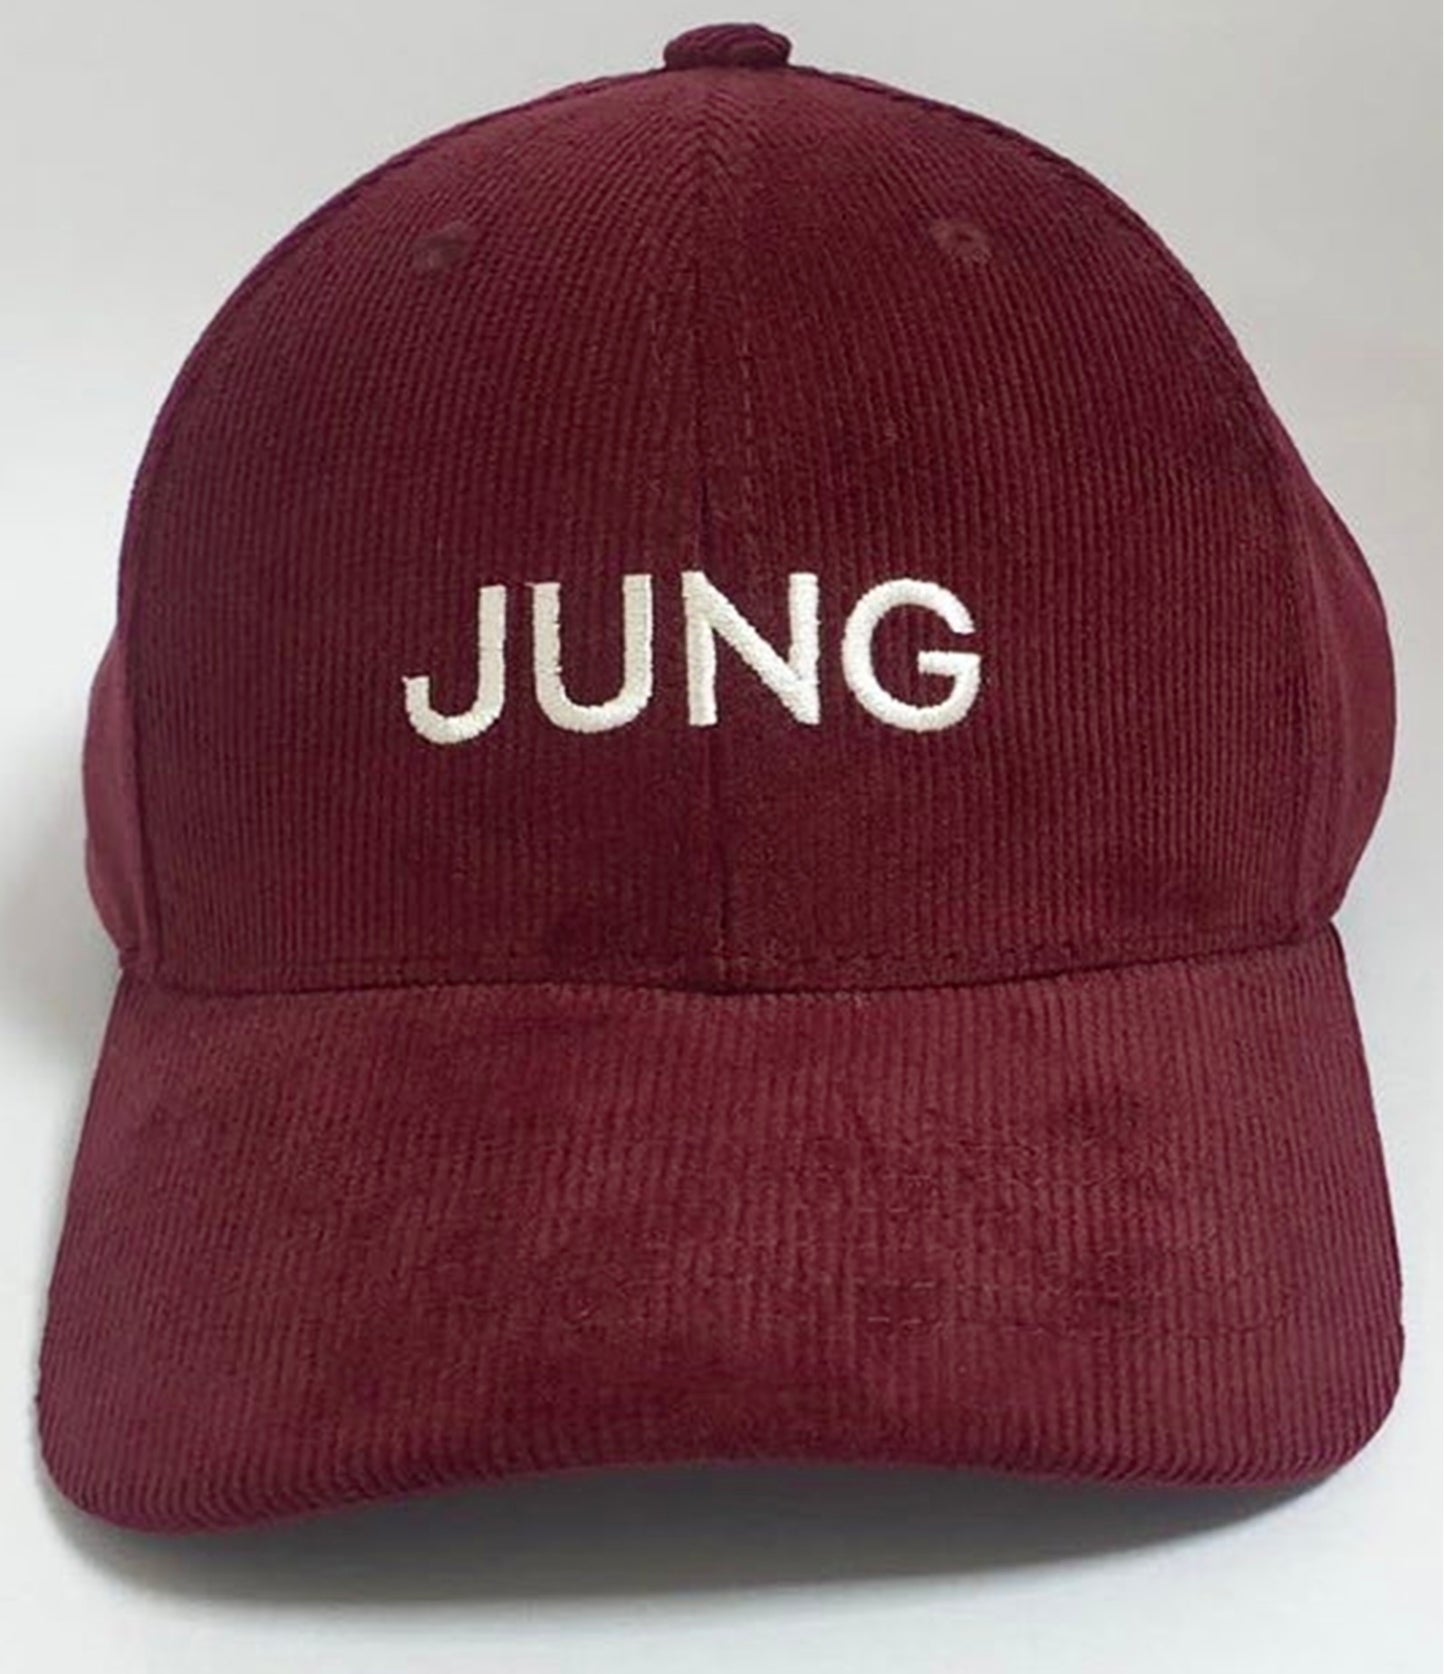 Jung Red CAP